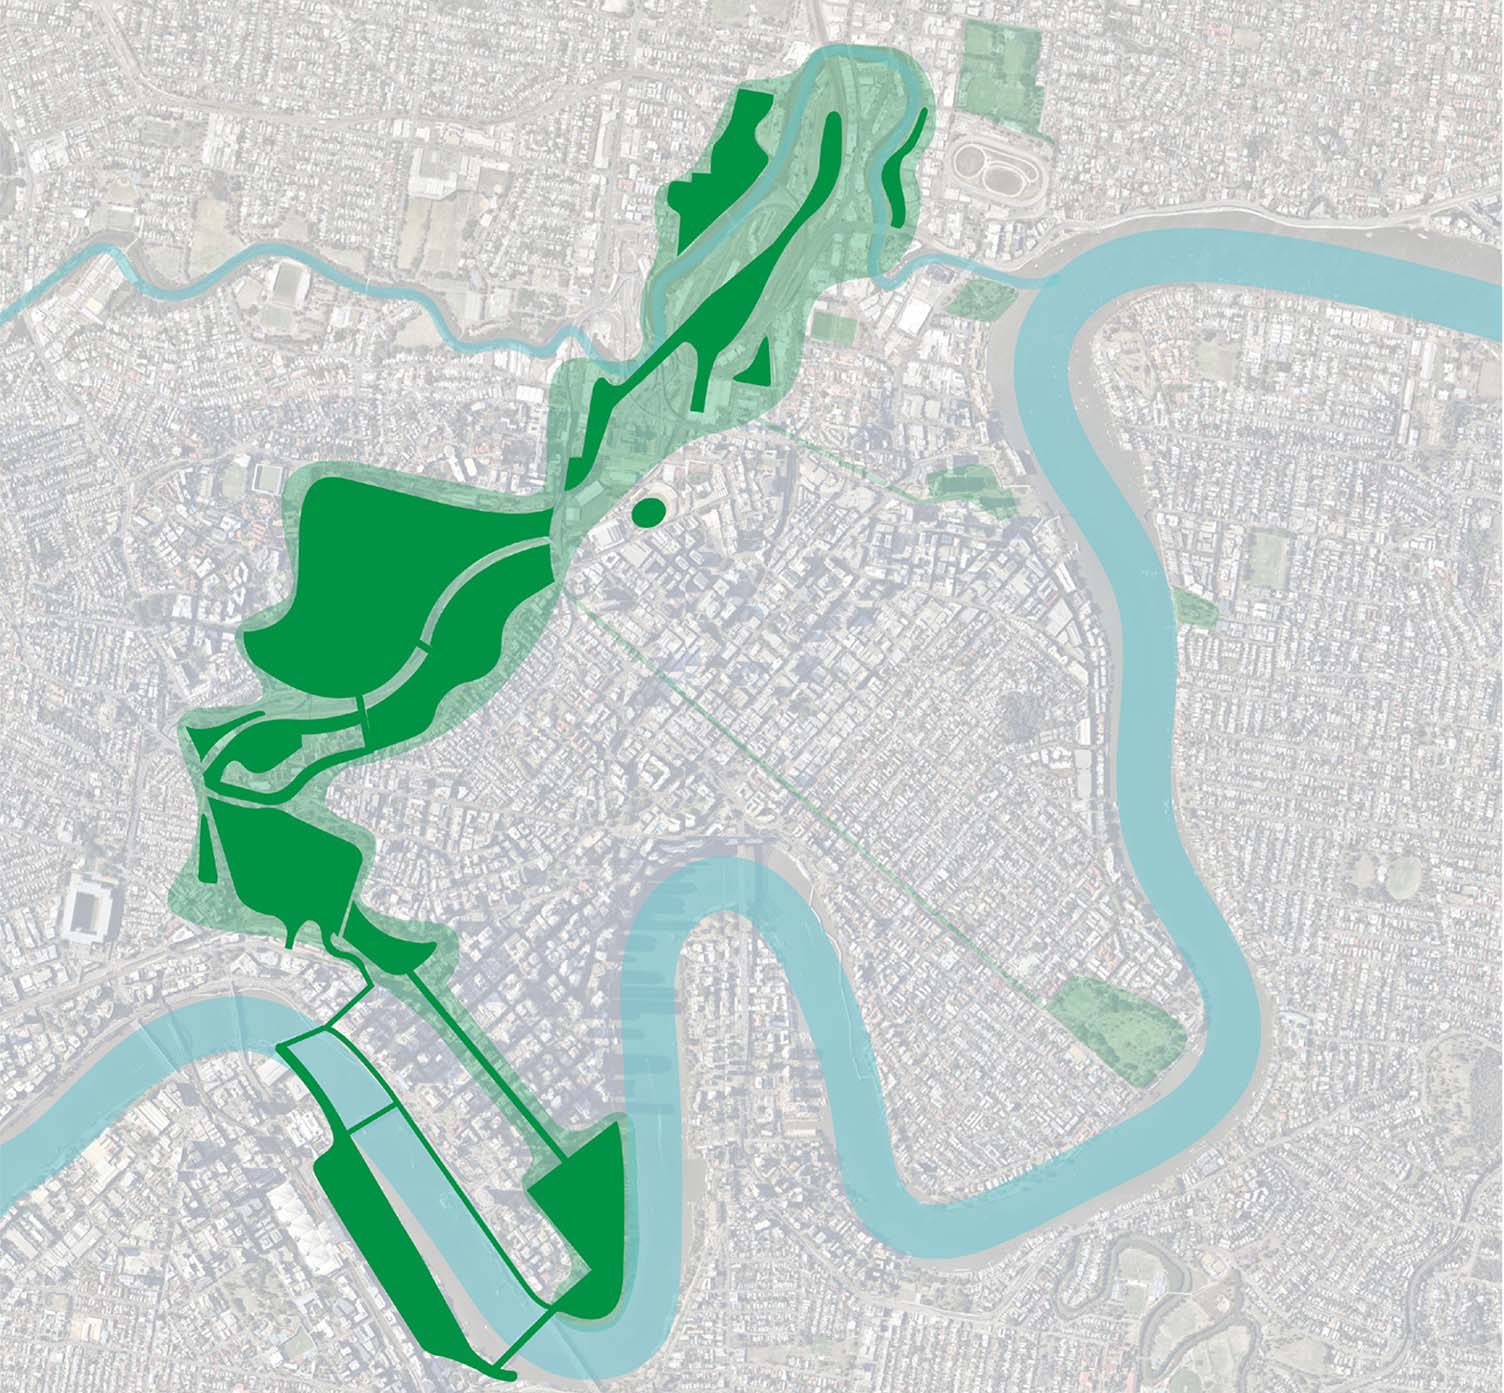 A 4.5 km continuous green corridor - Brisbane's Defining Green Corridor